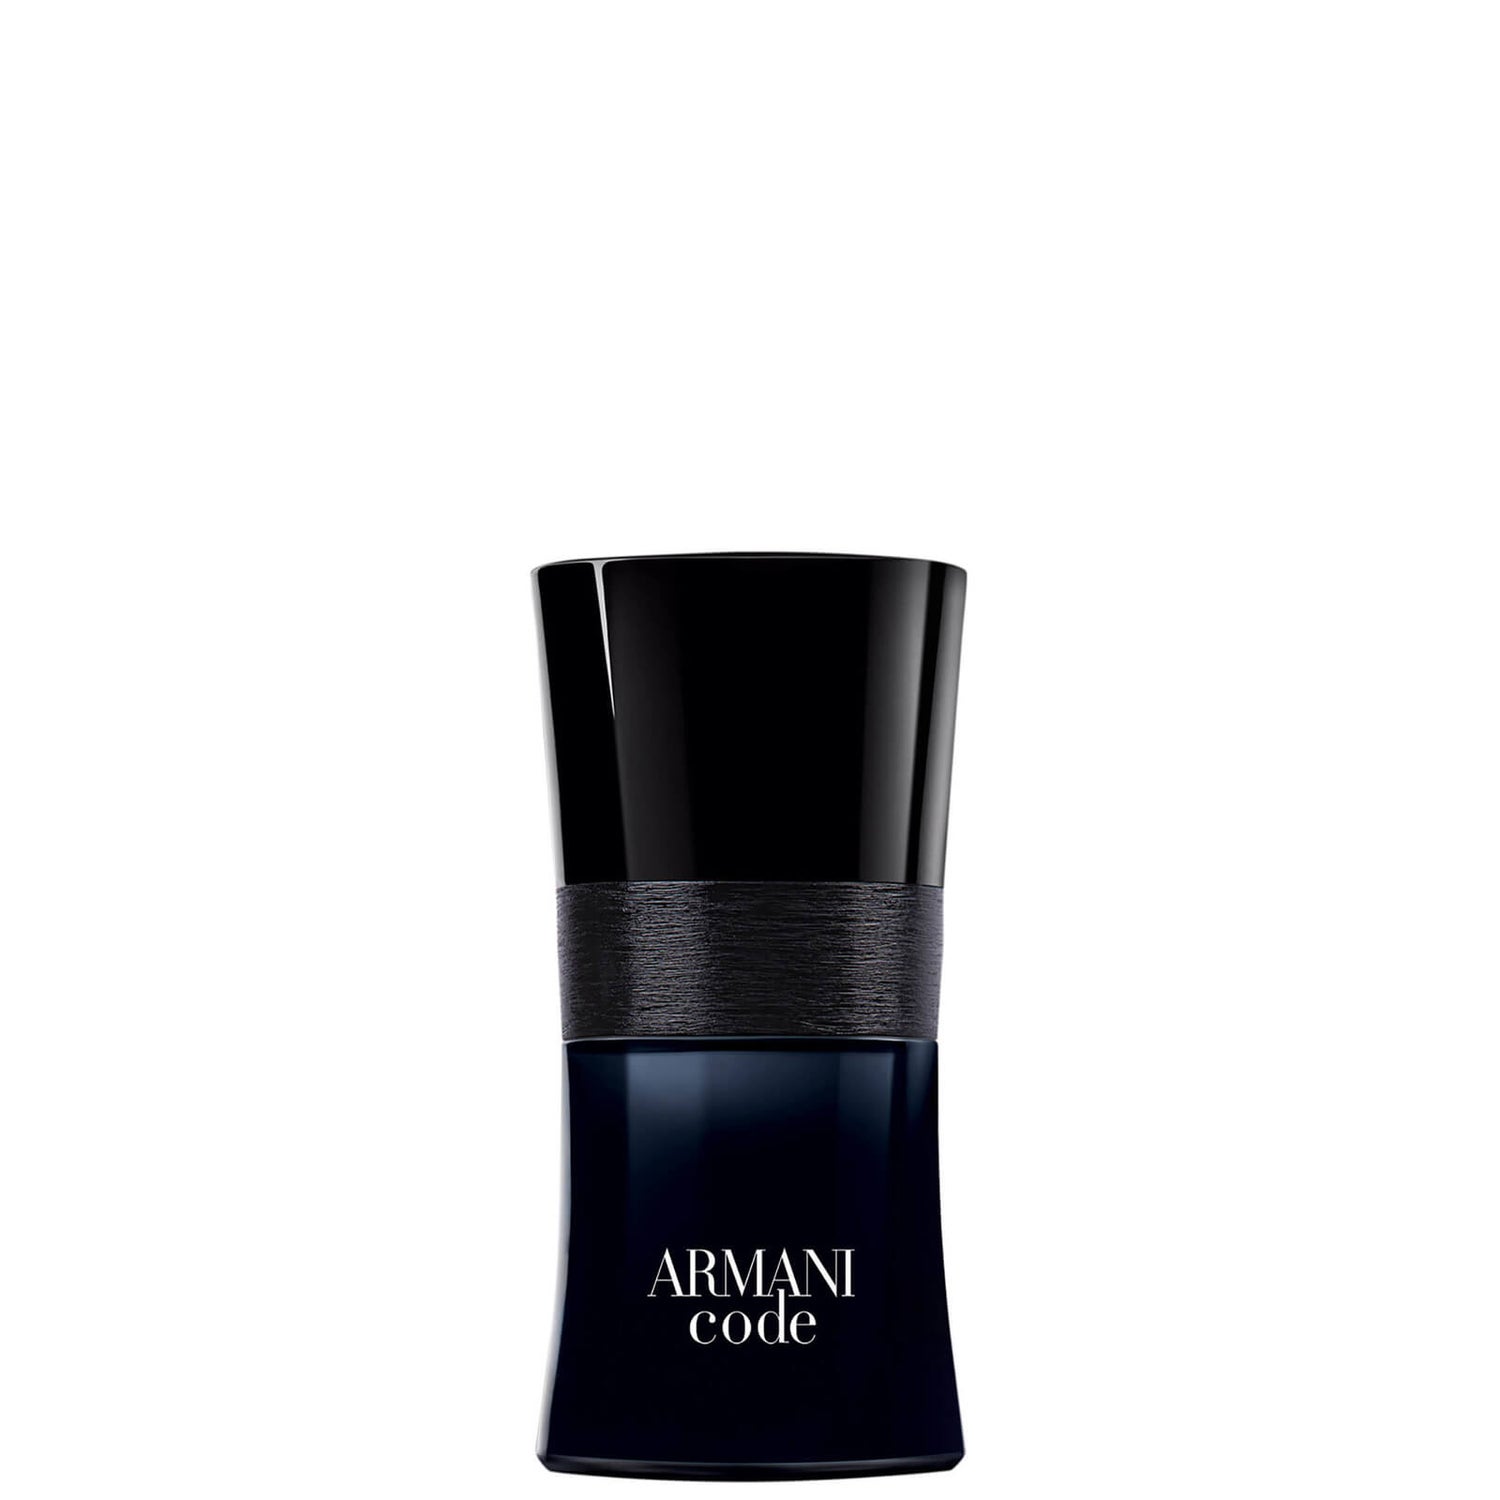 Armani Code Eau de Toilette -tuoksu - 30ml